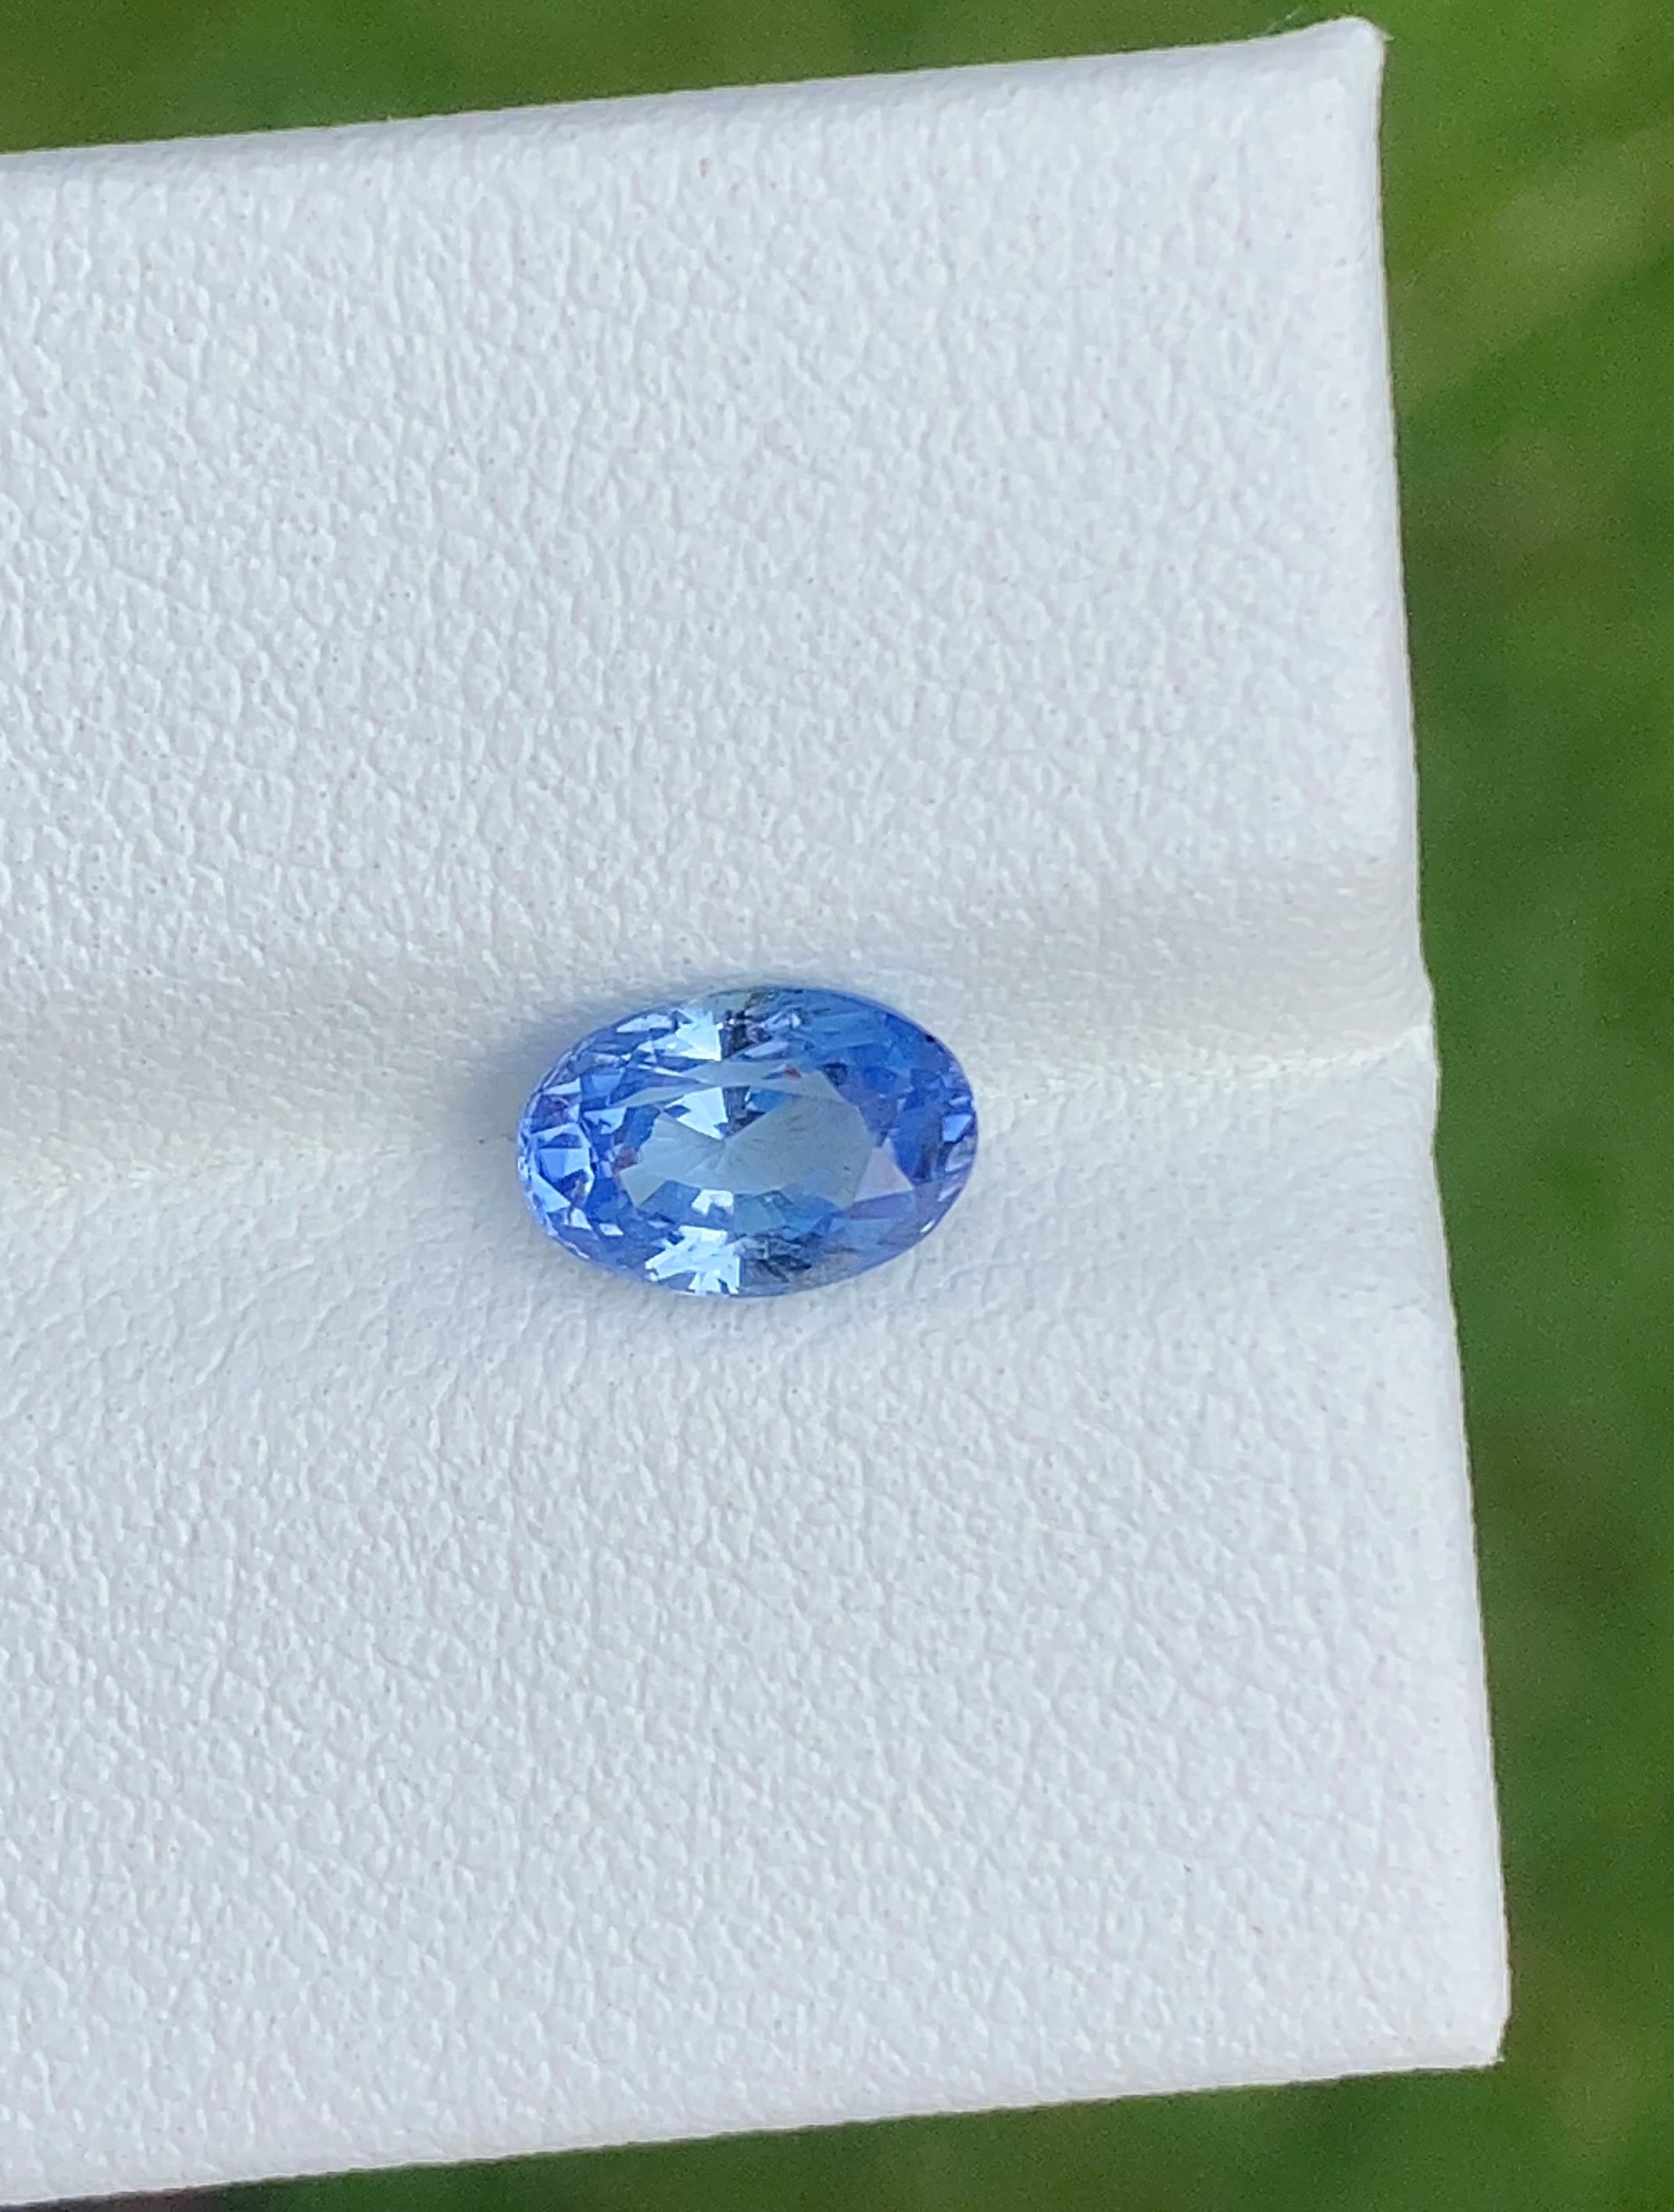 Ceylon Unheated Blue Sapphire 1.25 Carats.

• Variety: Sapphire
• Origin: Sri Lanka (Ceylon)
• Color(s): Blue 
• Shape/Cutting Style: Oval
• Dimensions: 8.3mm x 6.1mm x 5.2mm
• Calibrated: No
• Clarity Grade: vVS1
• Treatment: None

Note: A lab